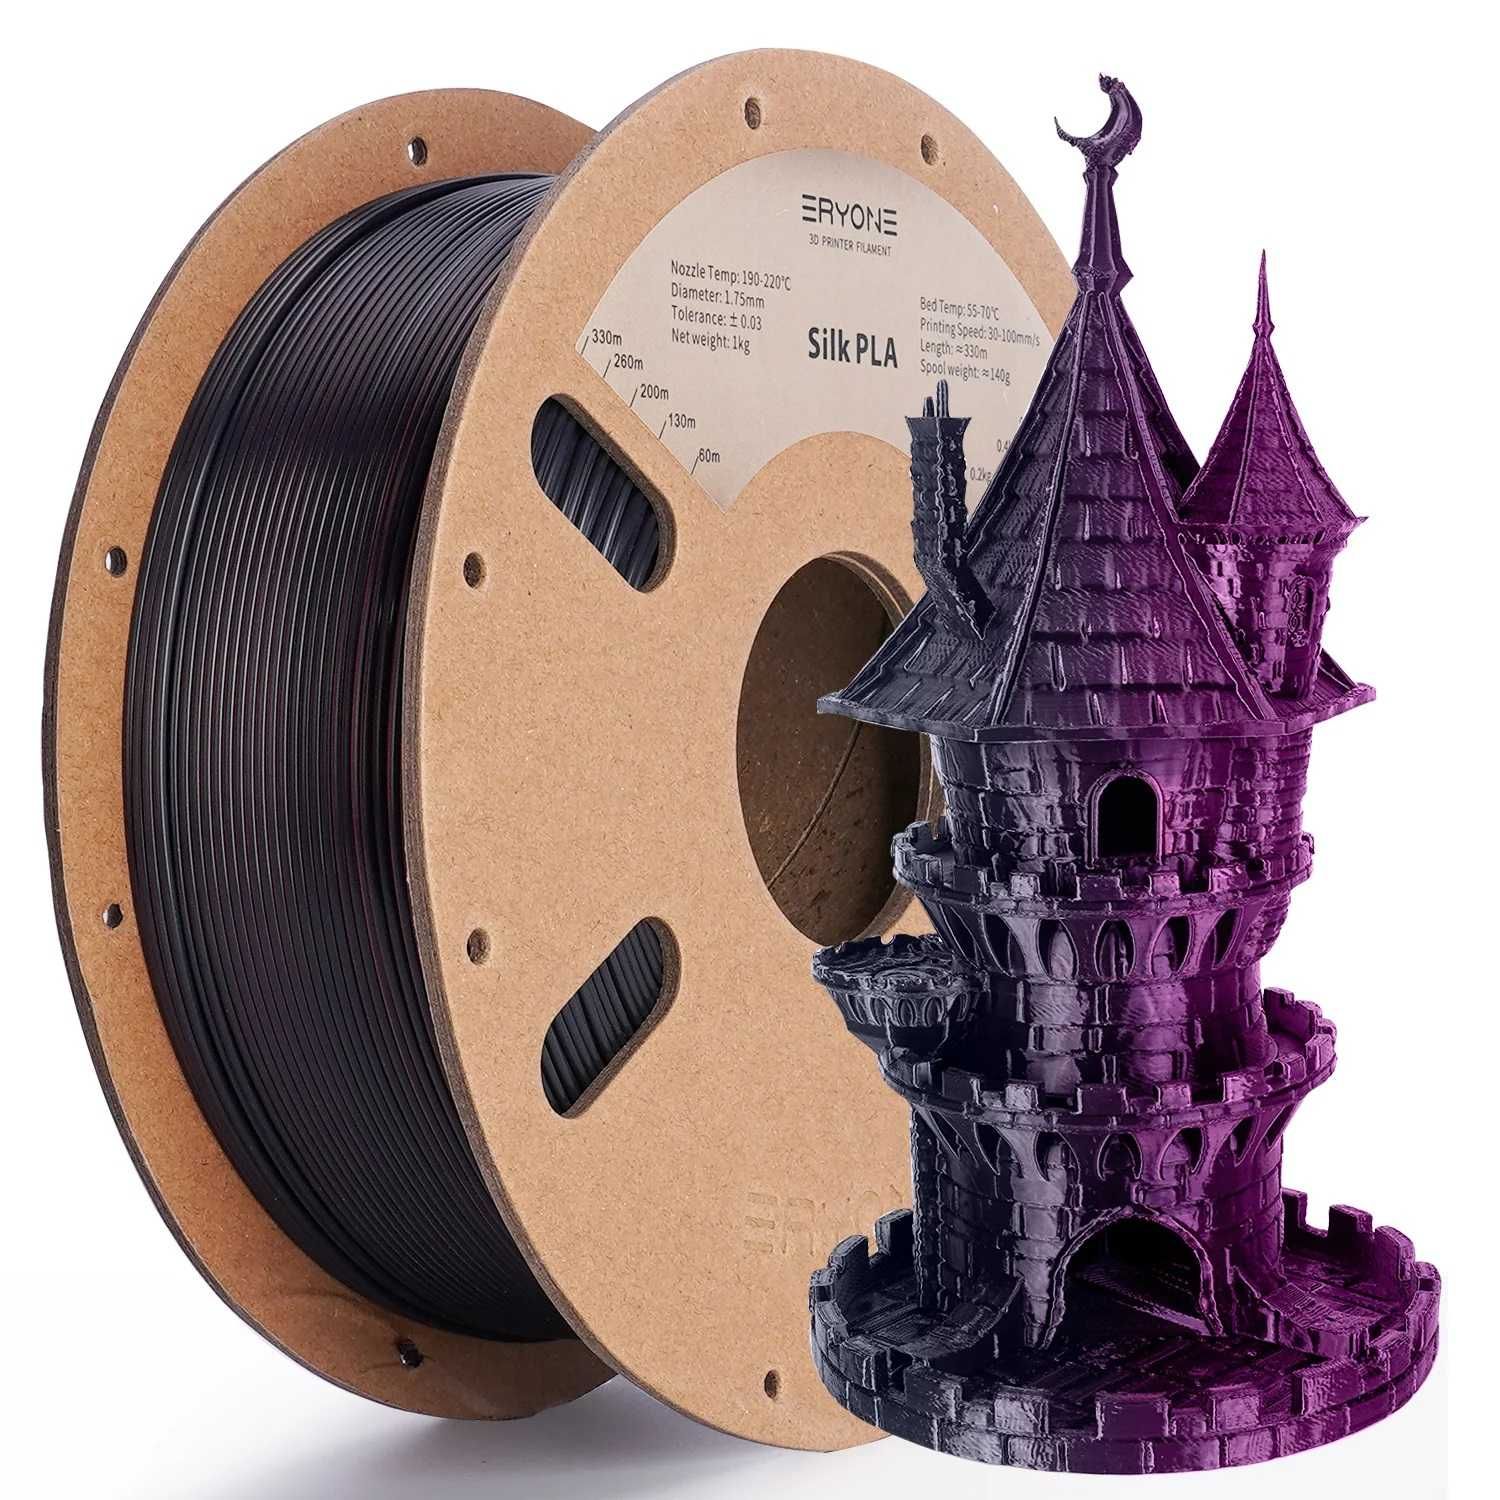 PLA Dual/Tri Color Silk Filament, ПЛА Филамент (Нишка) за 3Д Принтер